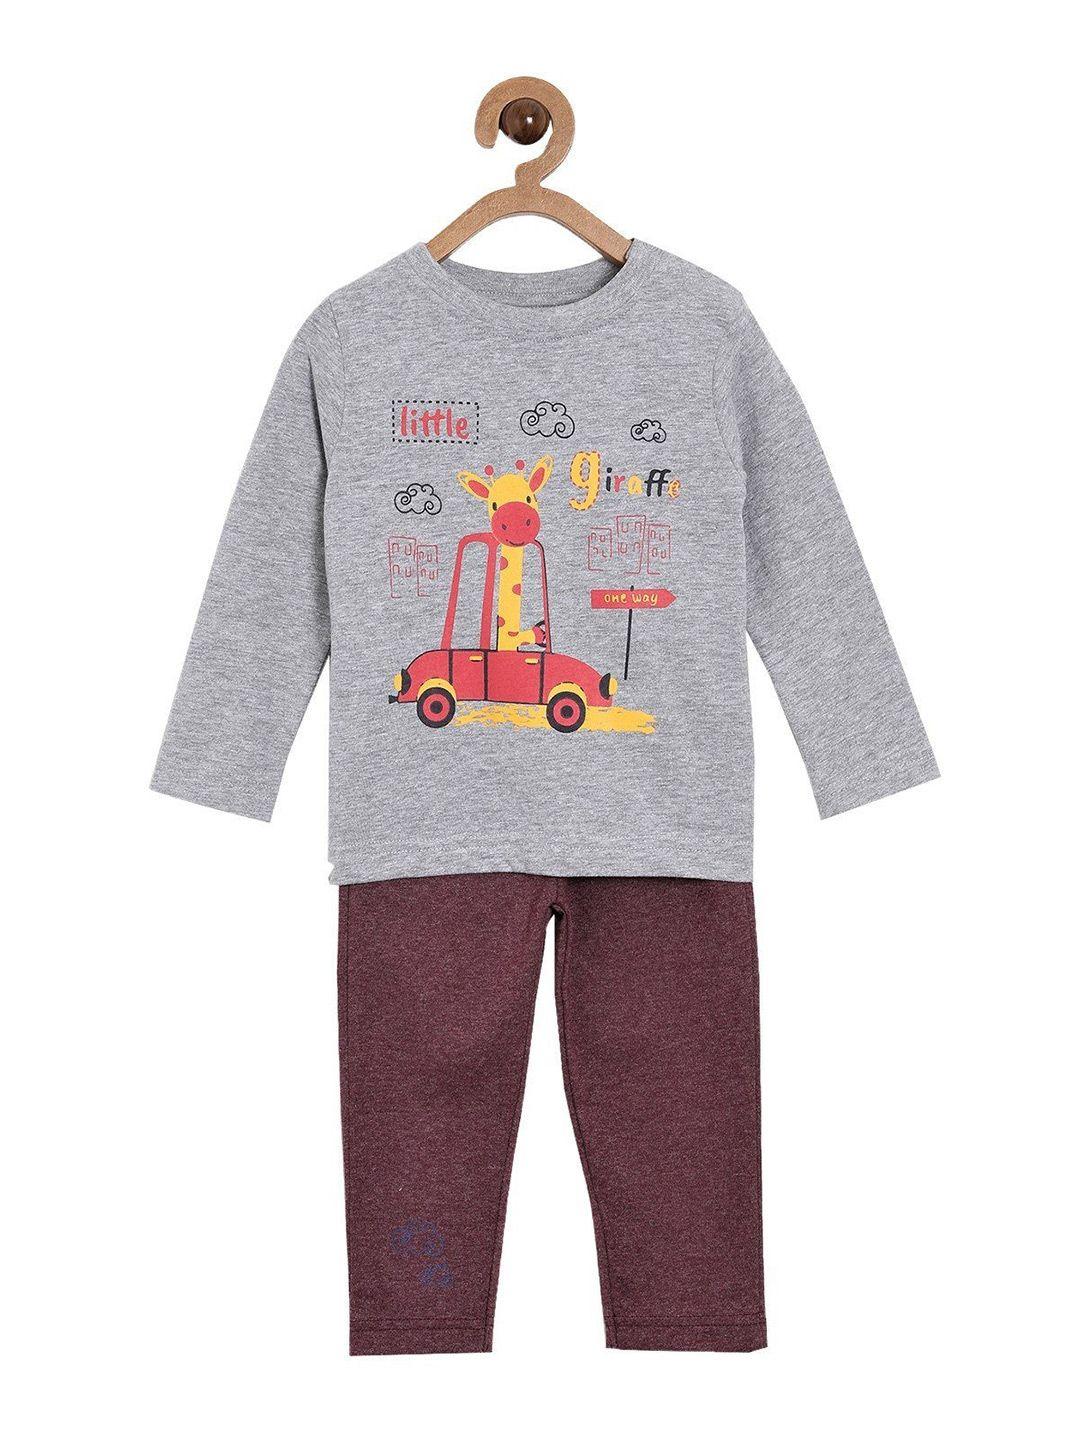 the mom store kids grey & brown printed pure cotton top with pyjamas